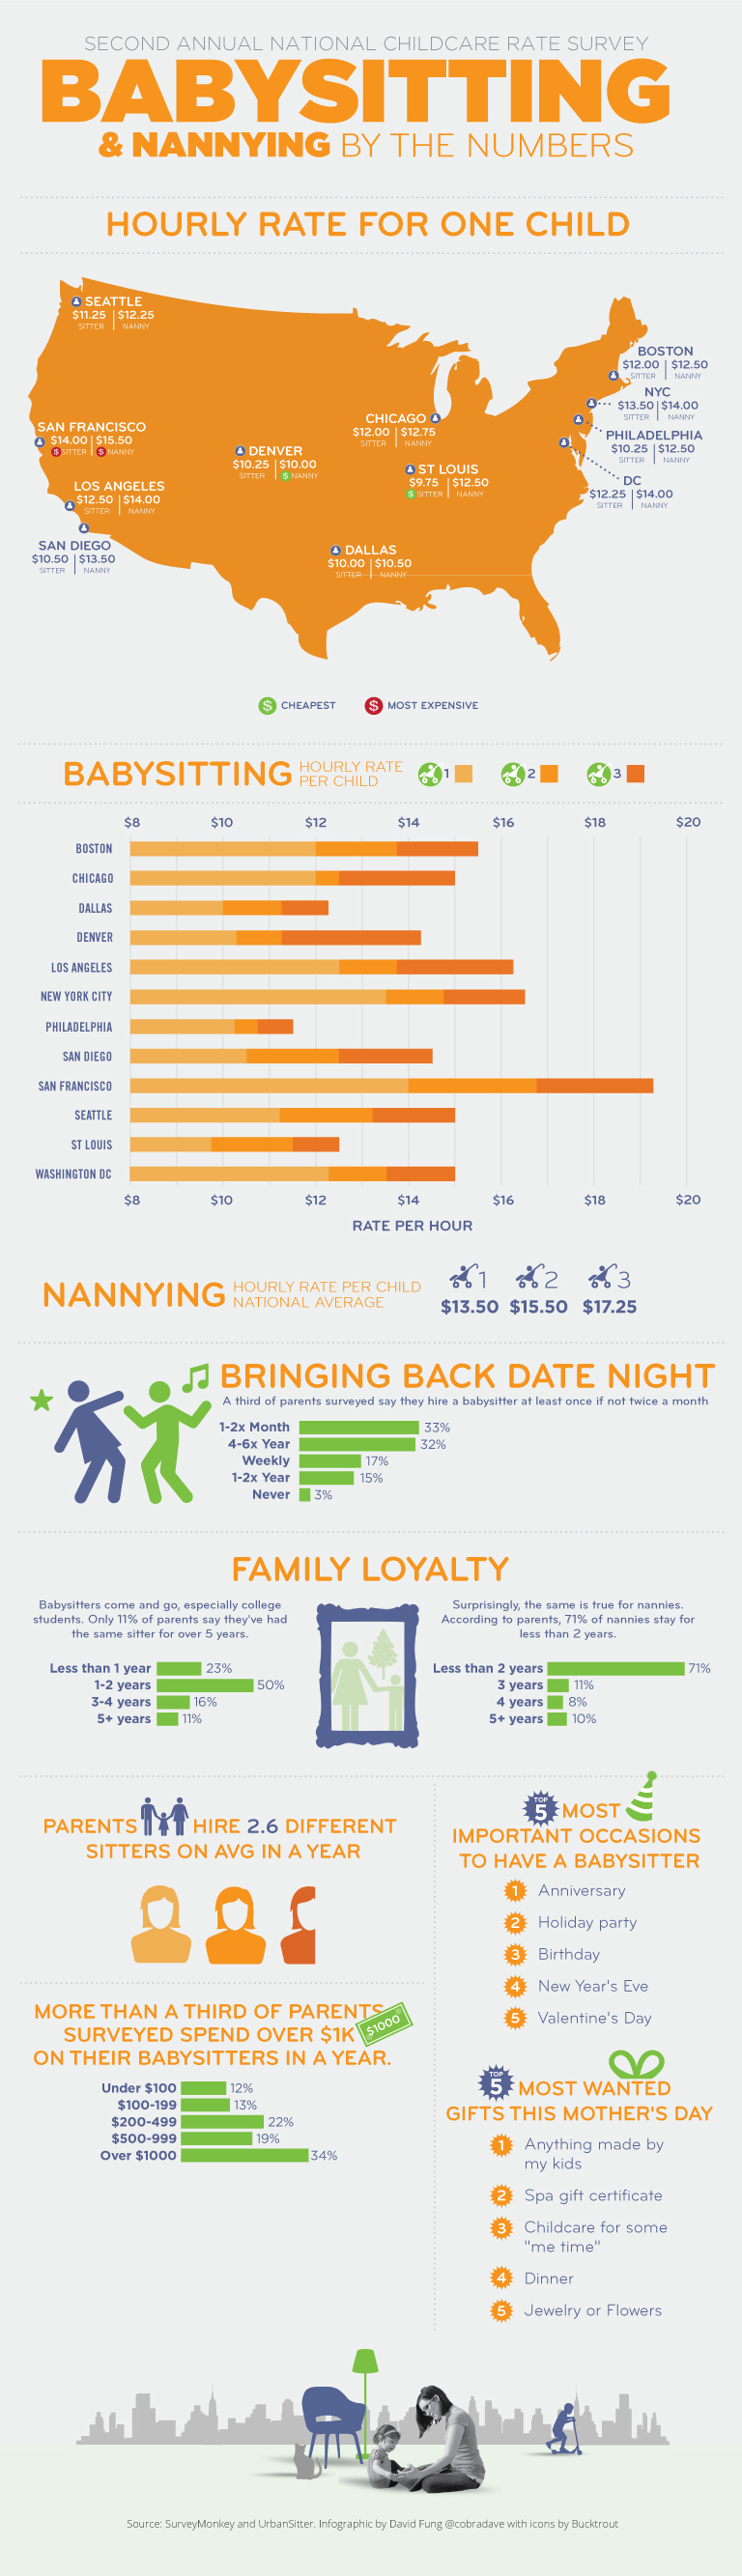 Babysitting Industry Statistics